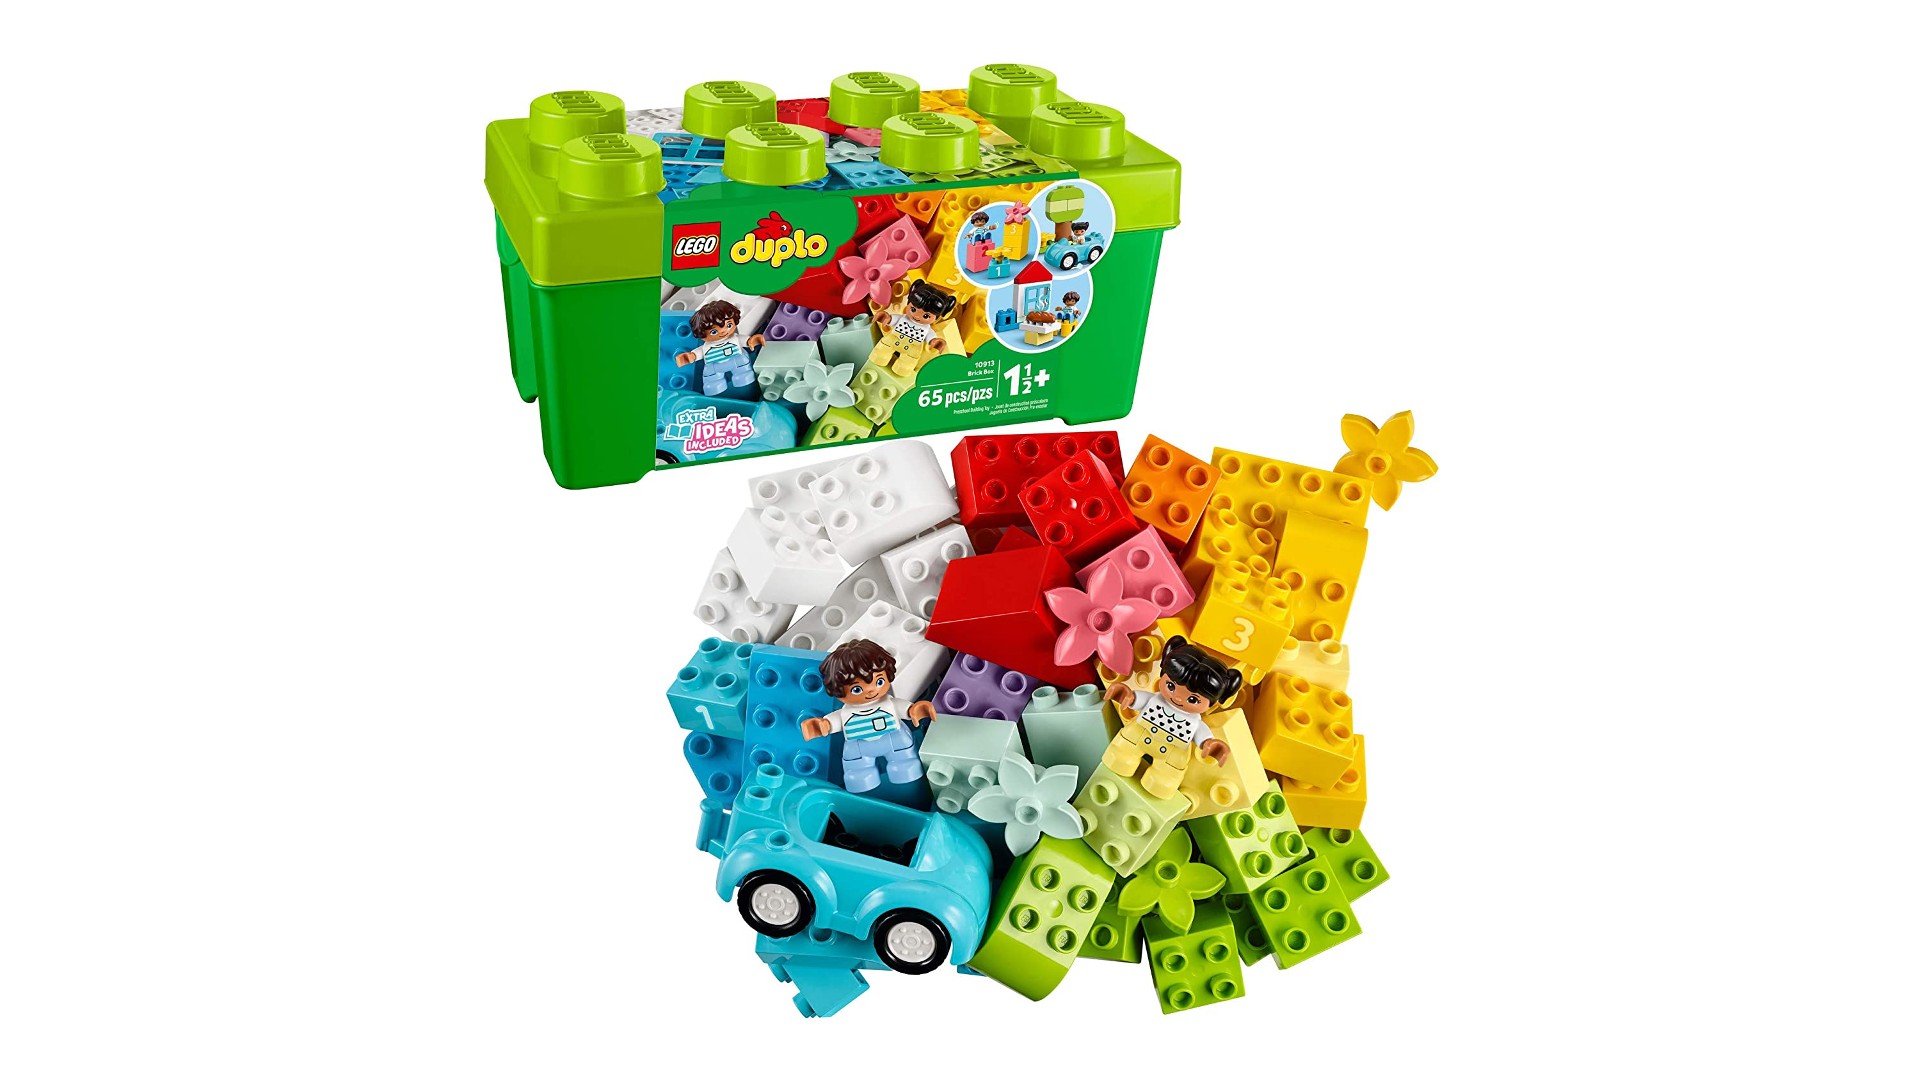 Lego Duplo classic brick box (65 pieces)